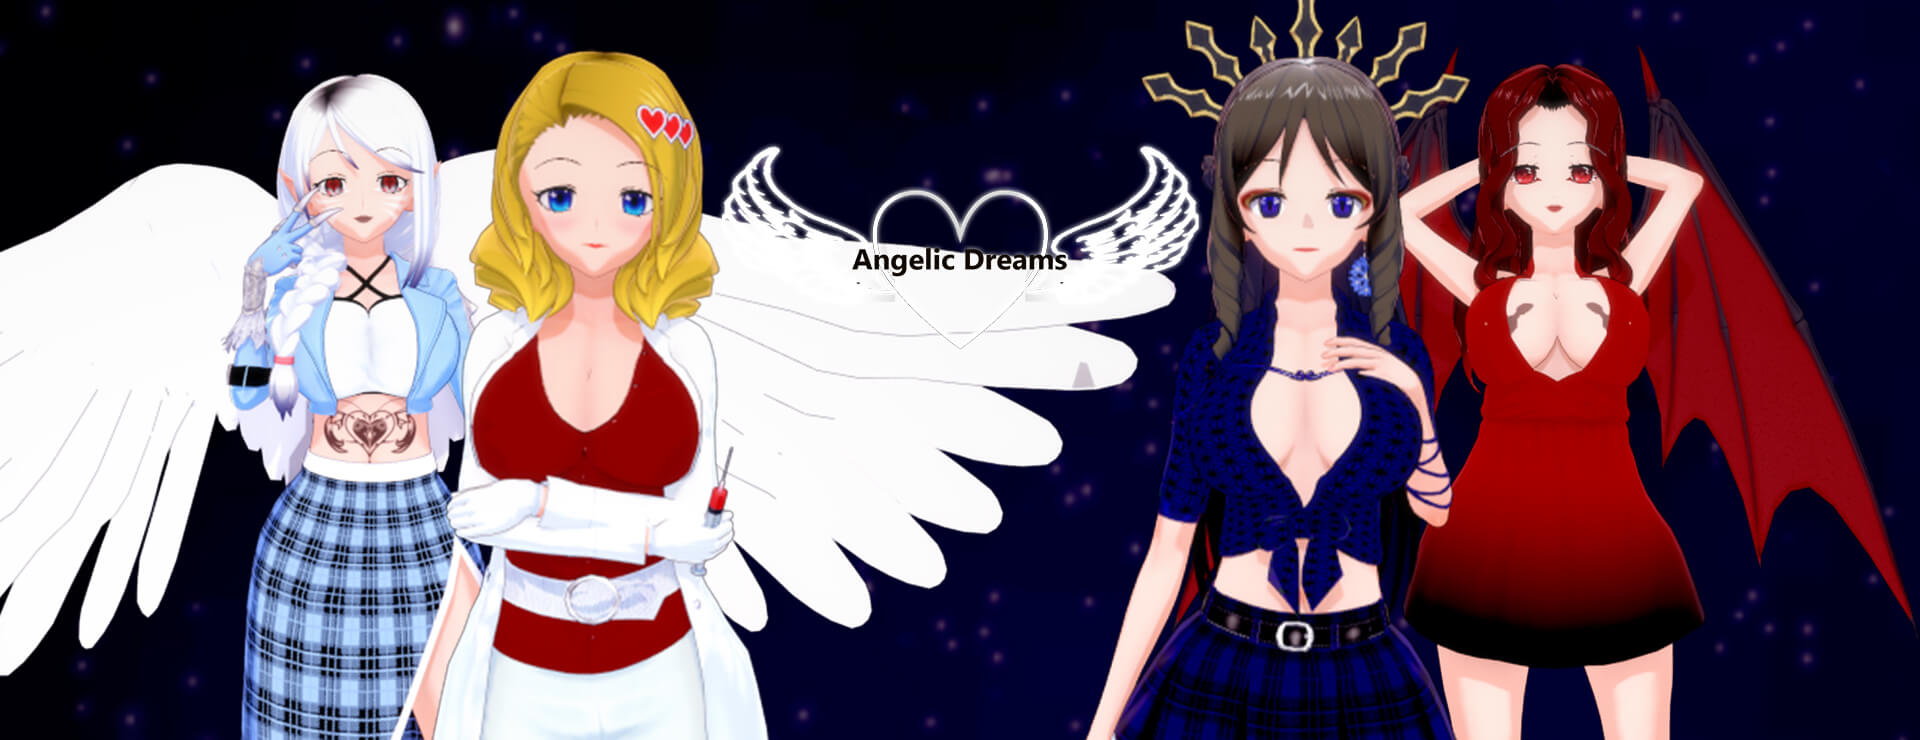 Angelic Dreams - Japanisches Adventure Spiel